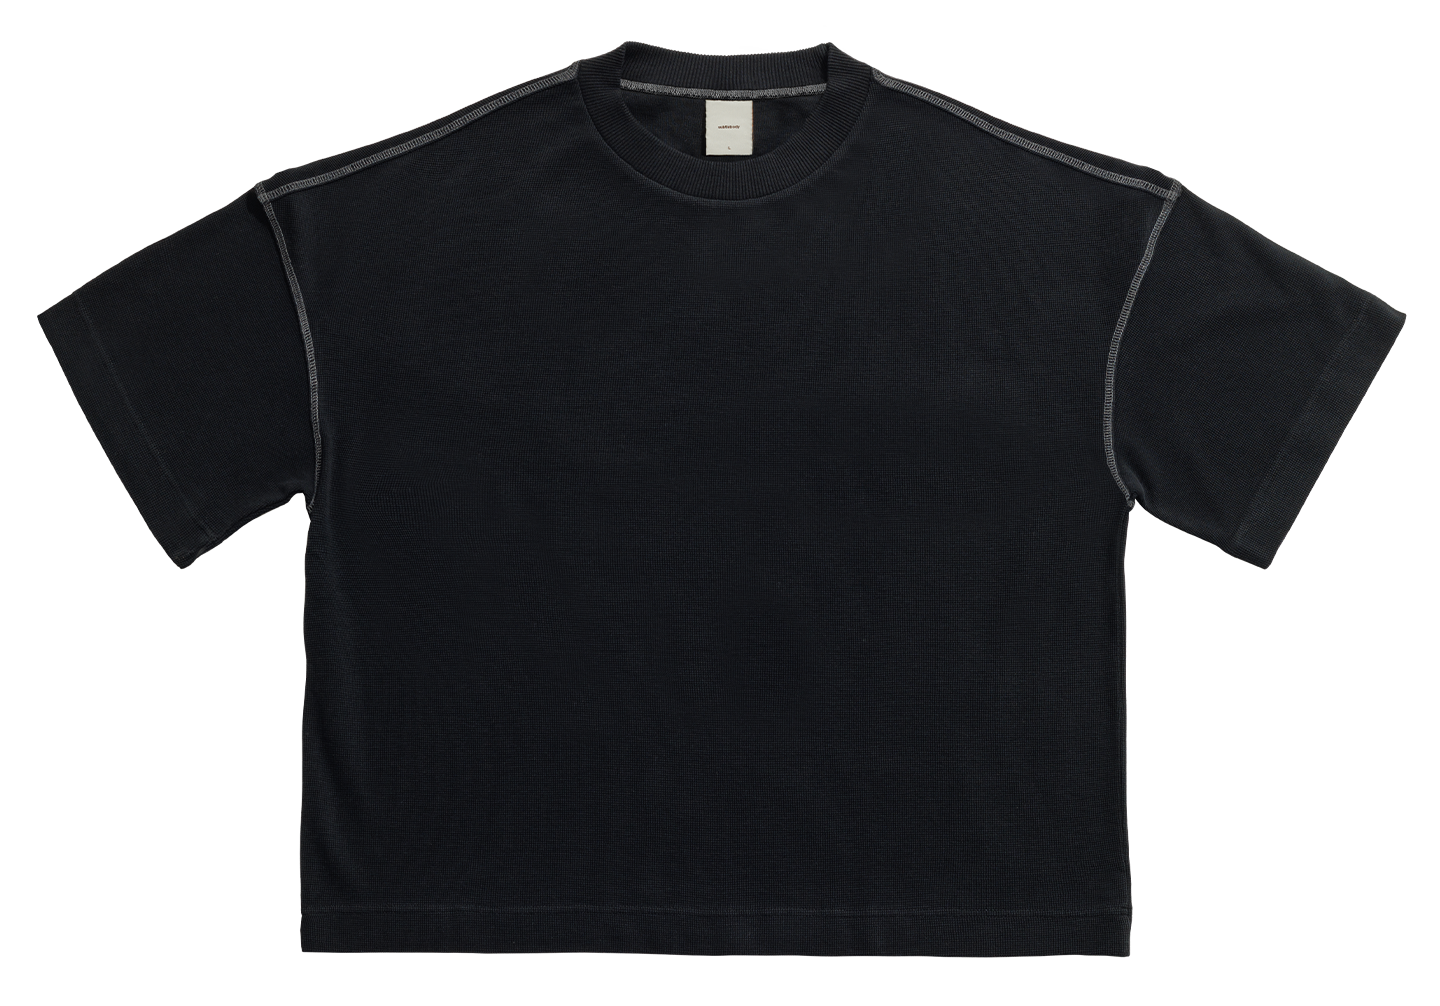 helium t shirt in black